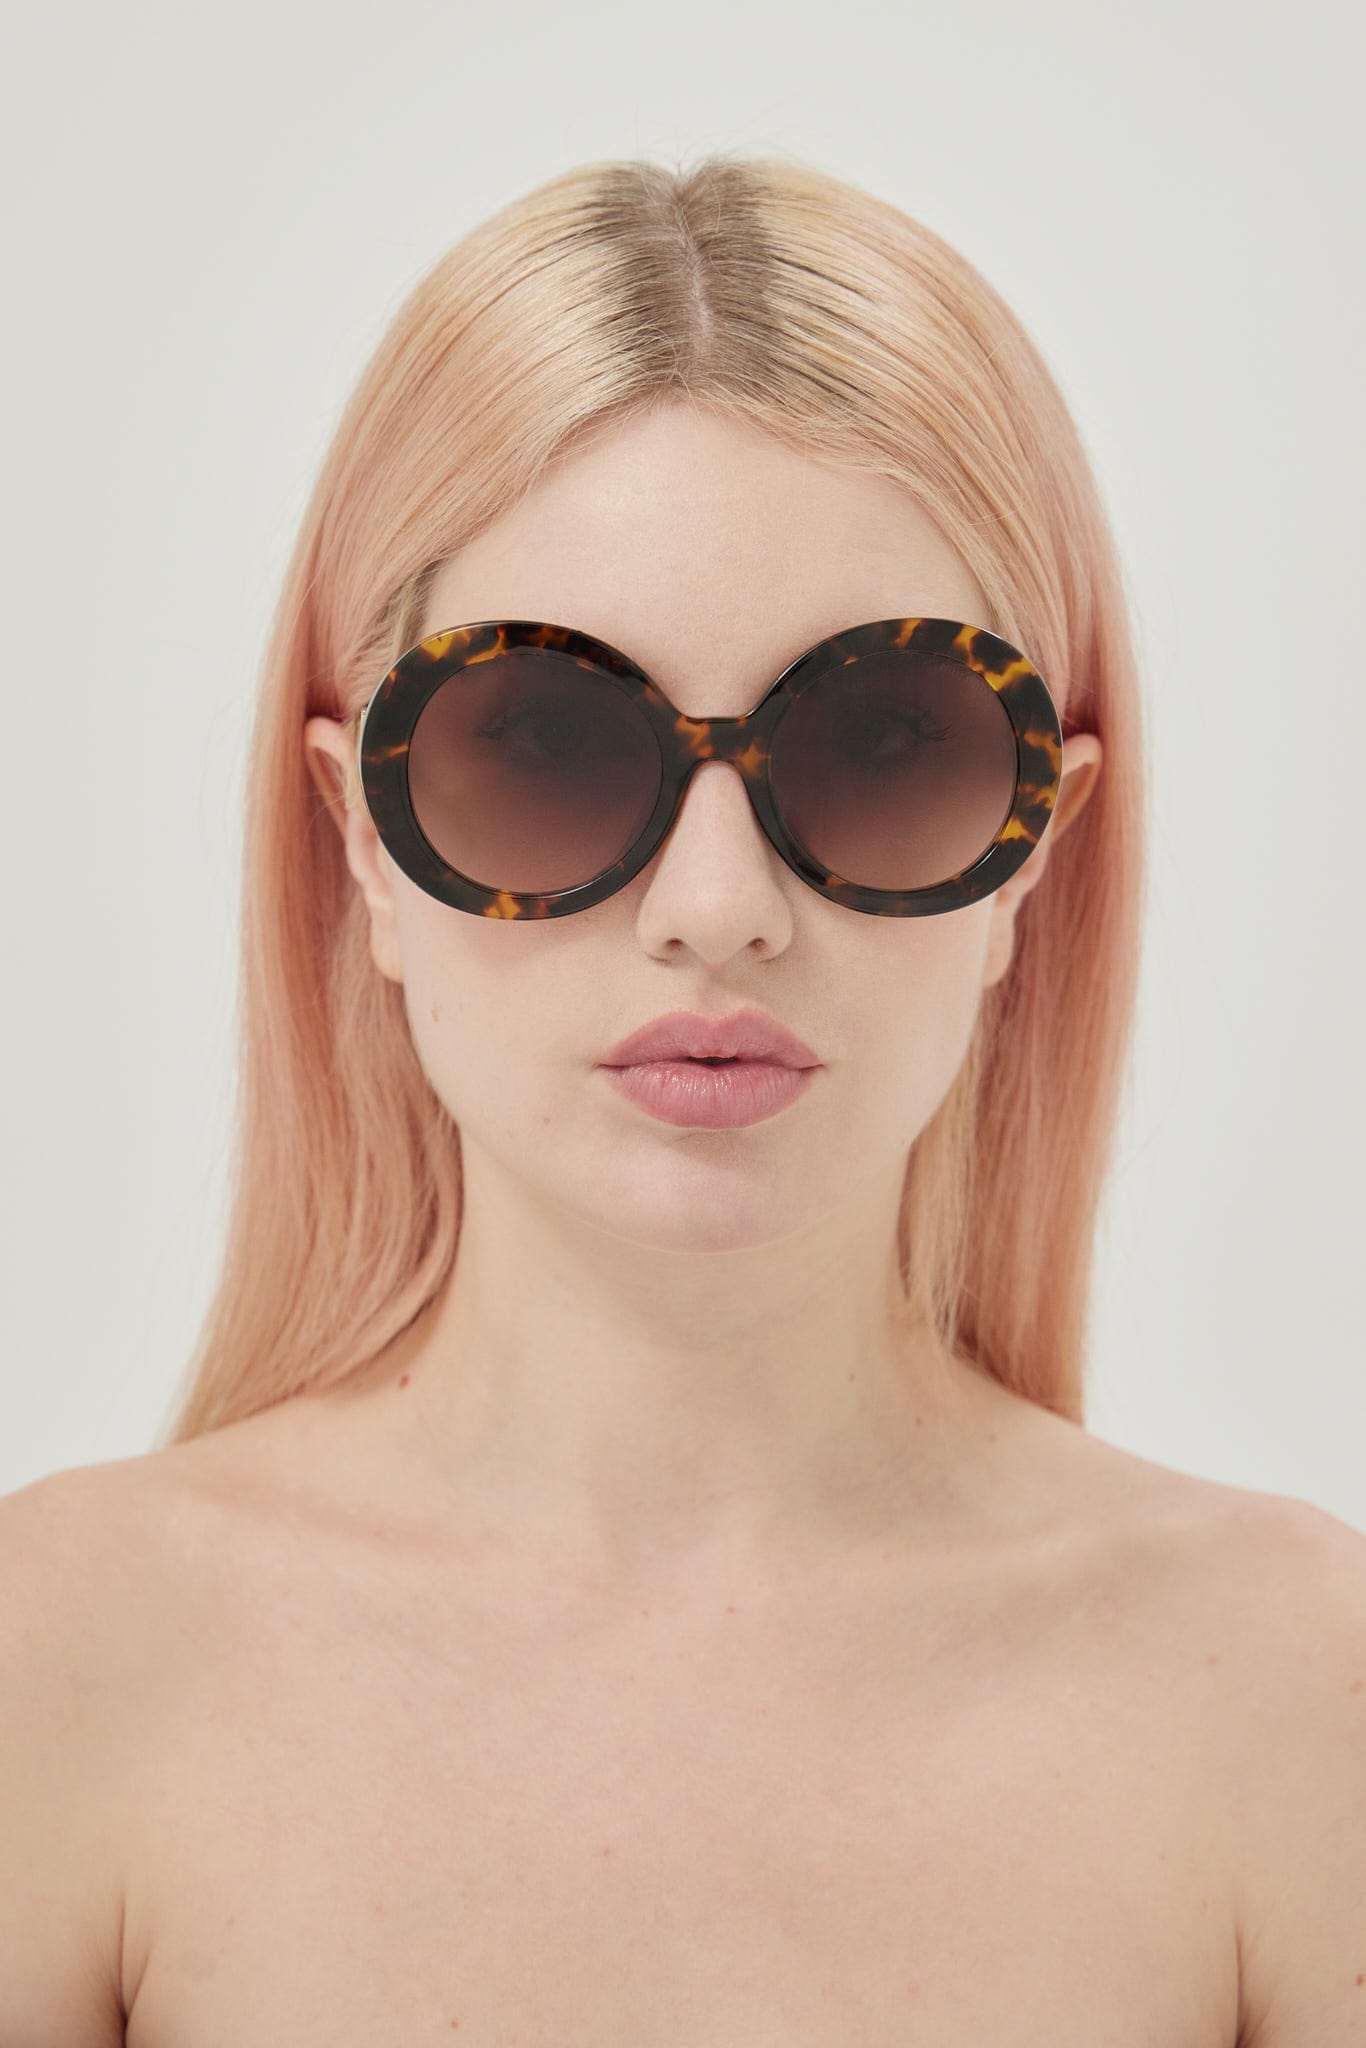 Miu Miu round havana sunglasses - Eyewear Club